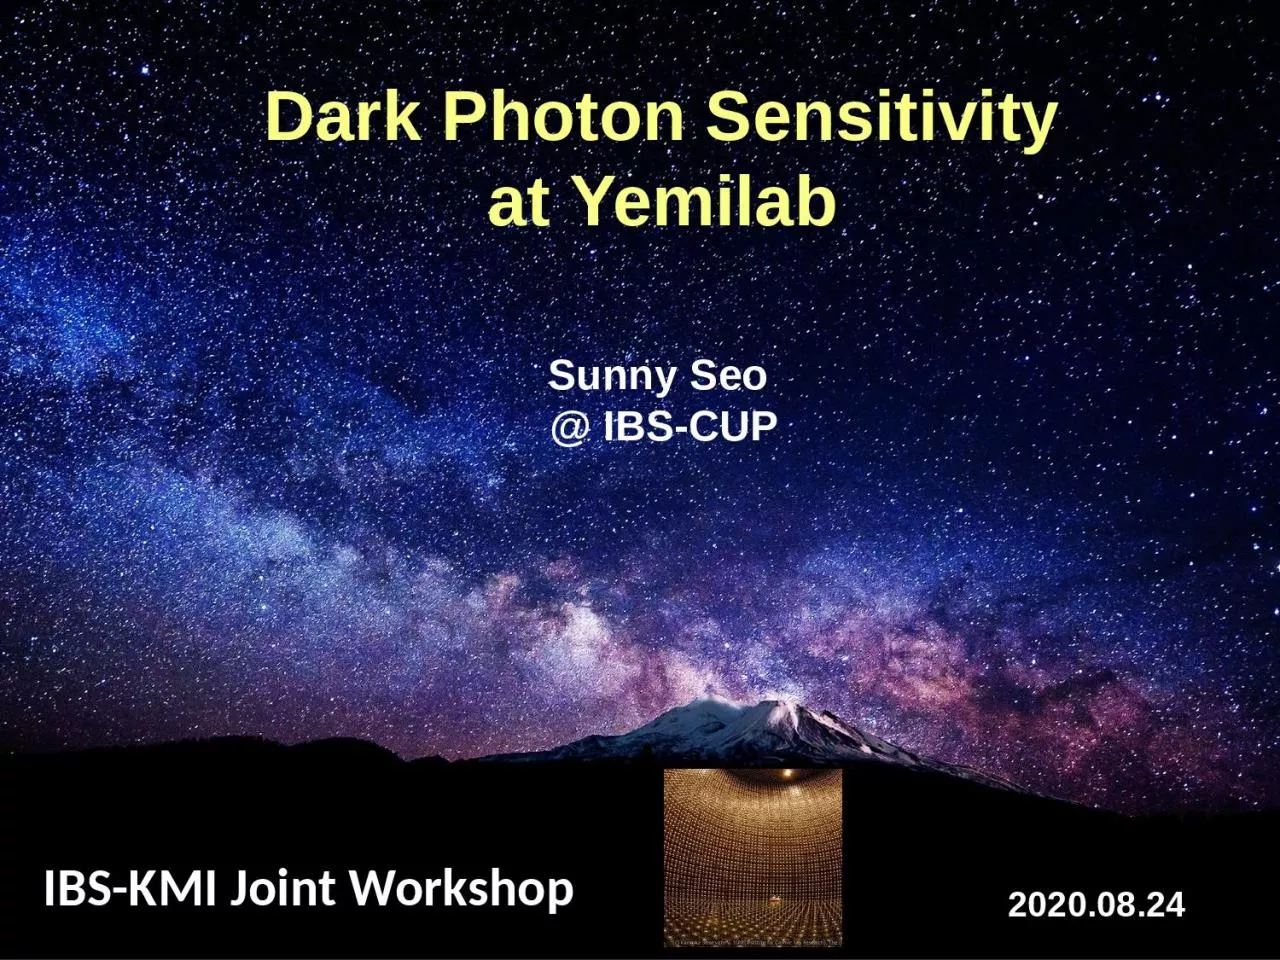 Sunny Seo, IBS IBS-KMI Workshop 2020.08.24